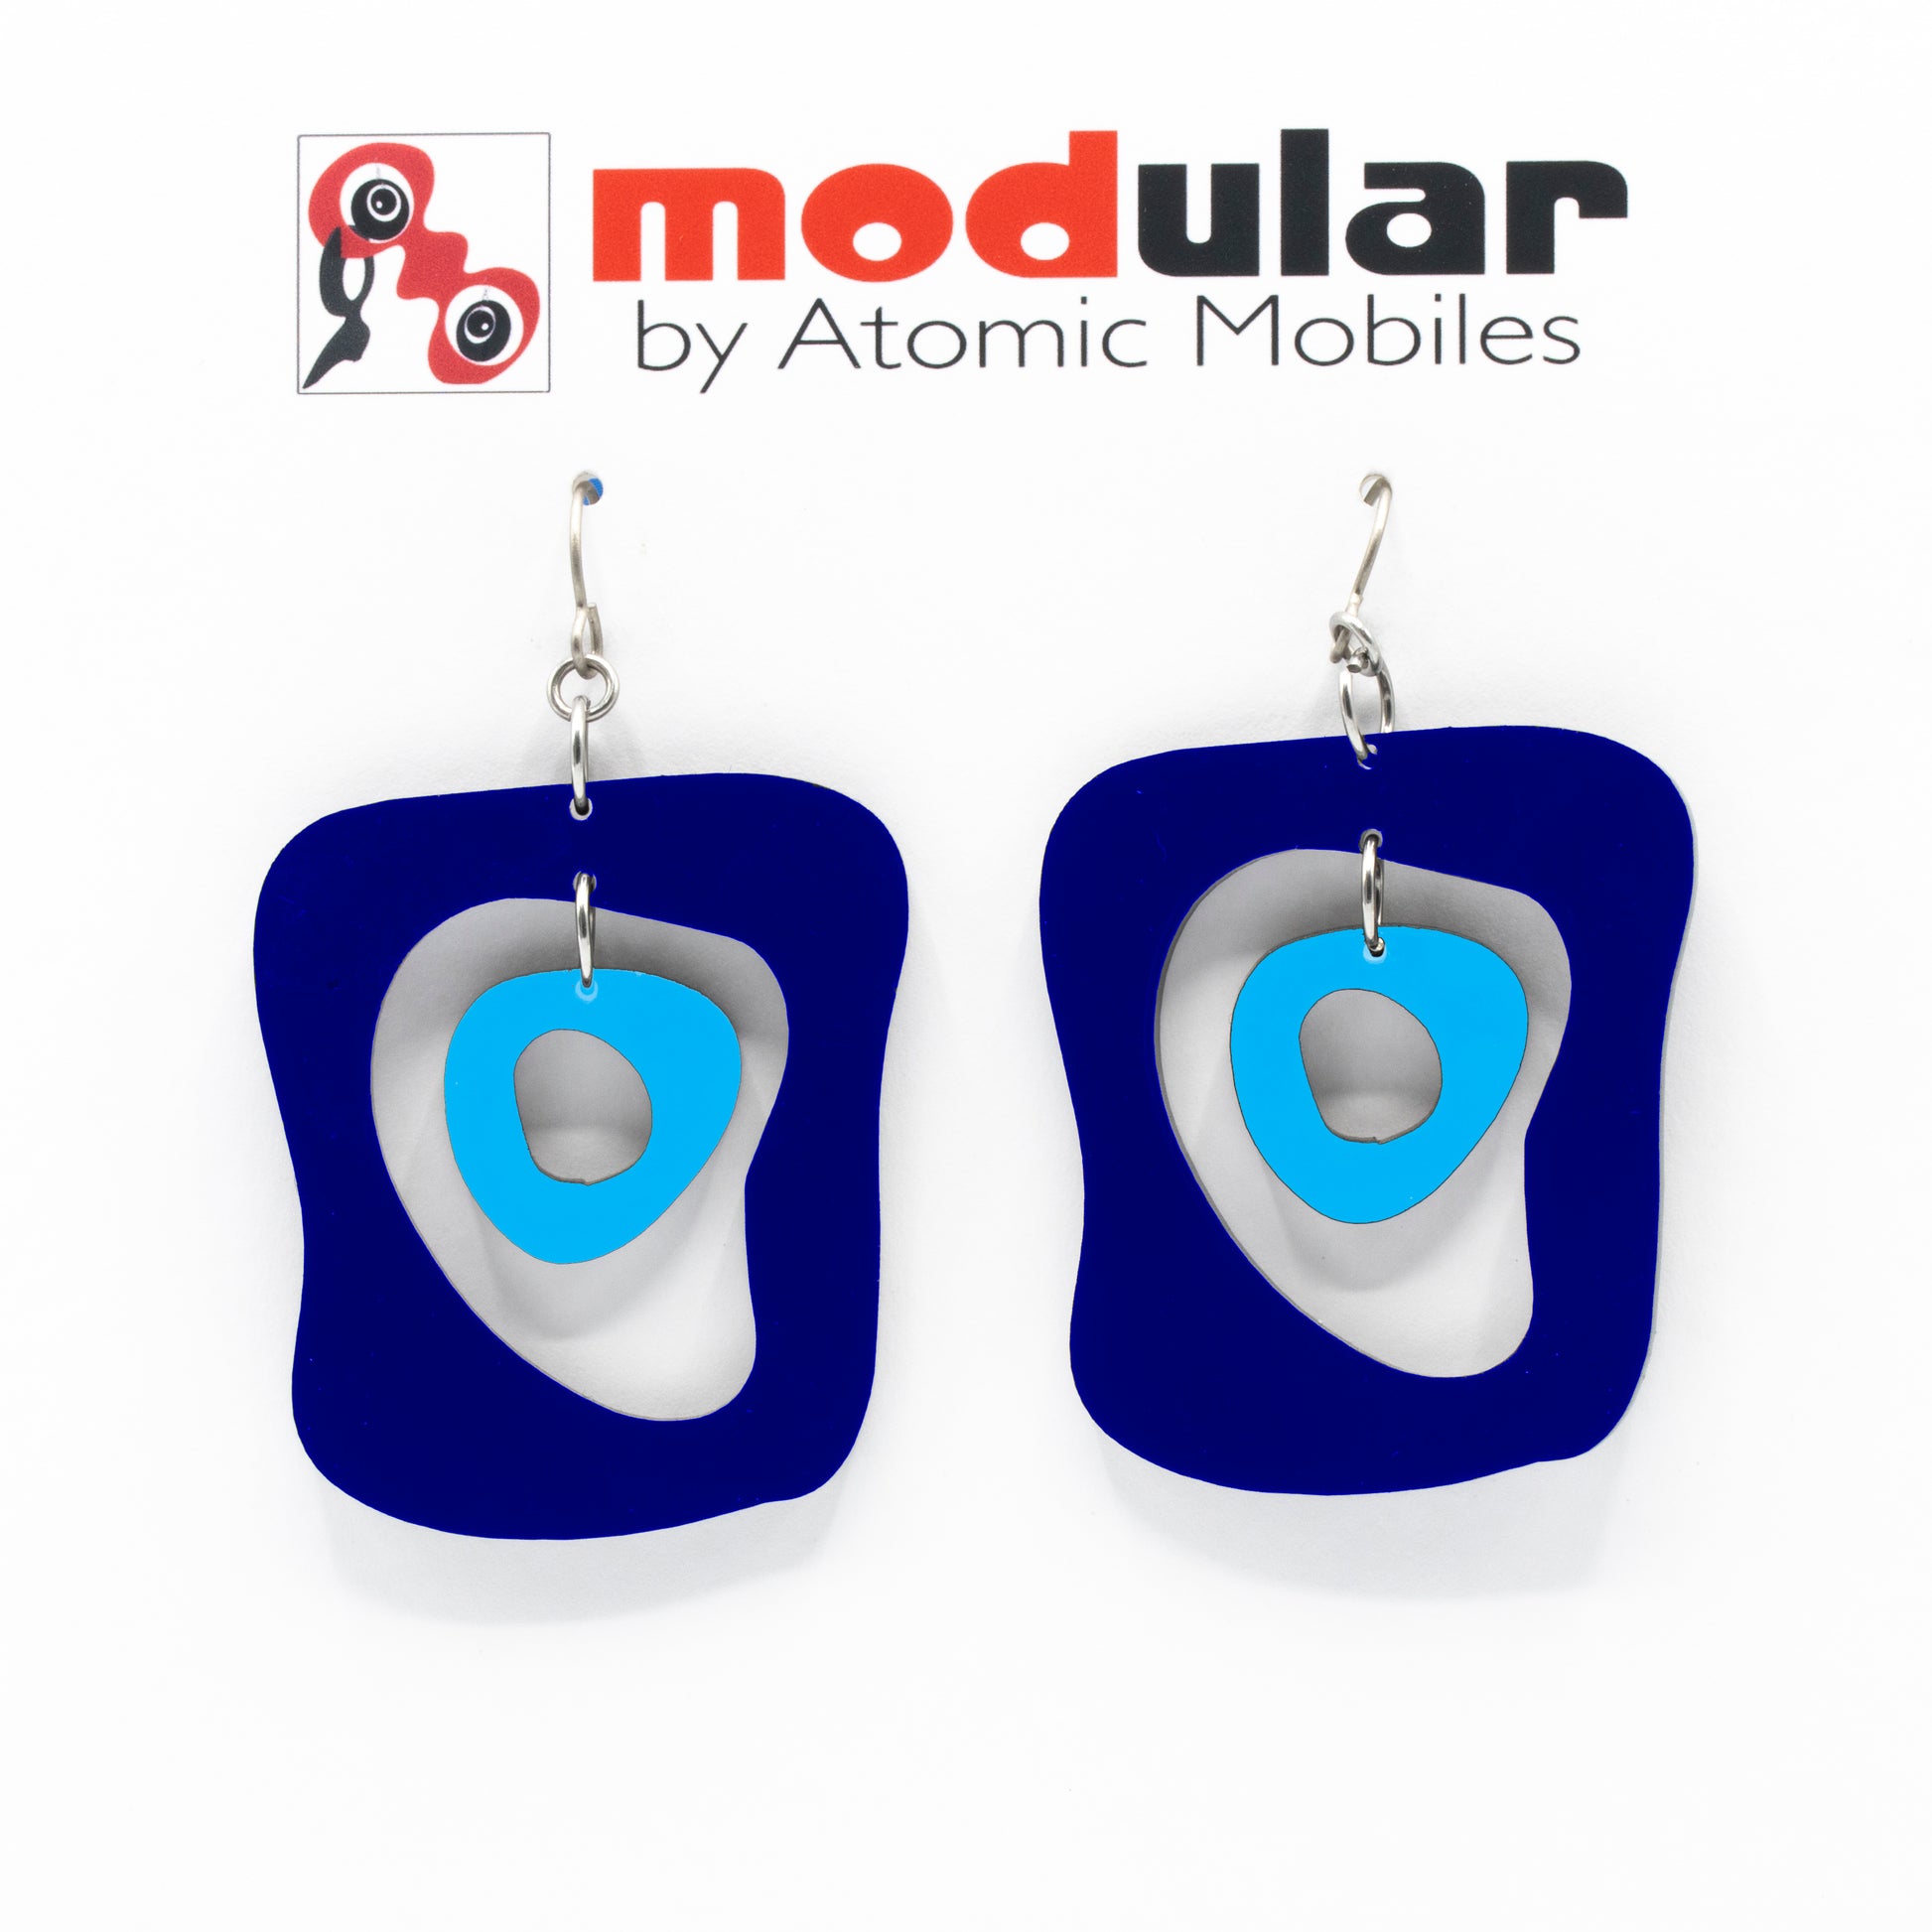 MODular Earrings - Mid Mod Statement Earrings in Navy Blue by AtomicMobiles.com - mid century inspired modern art dangle earrings